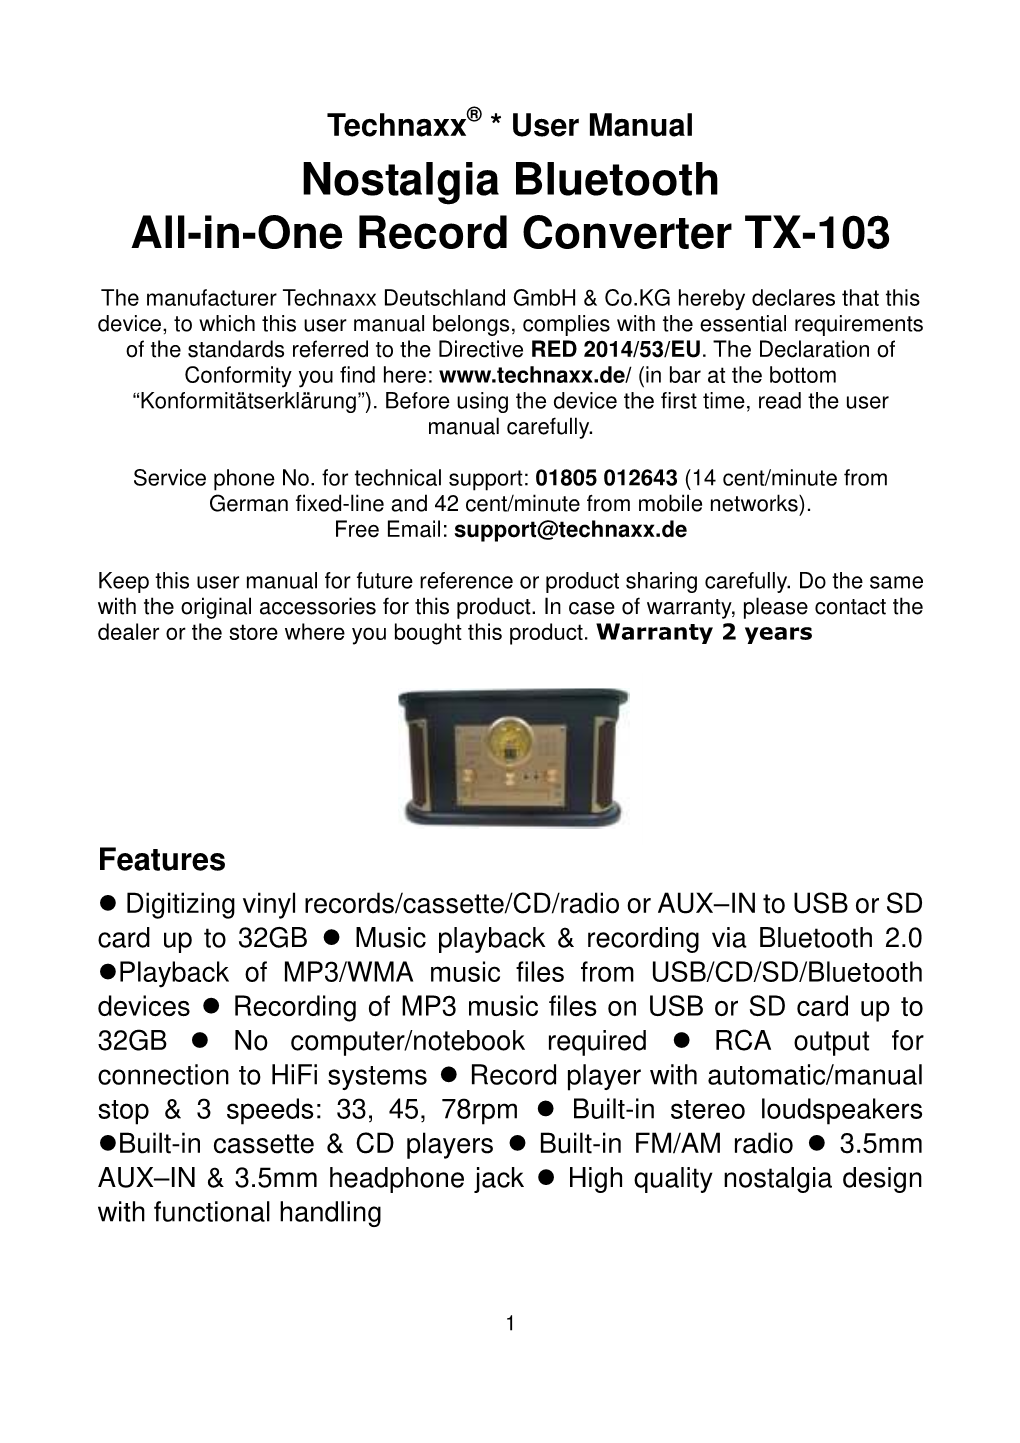 Nostalgia BT LP Converter All-In-One TX-103 Manual English 08-2017